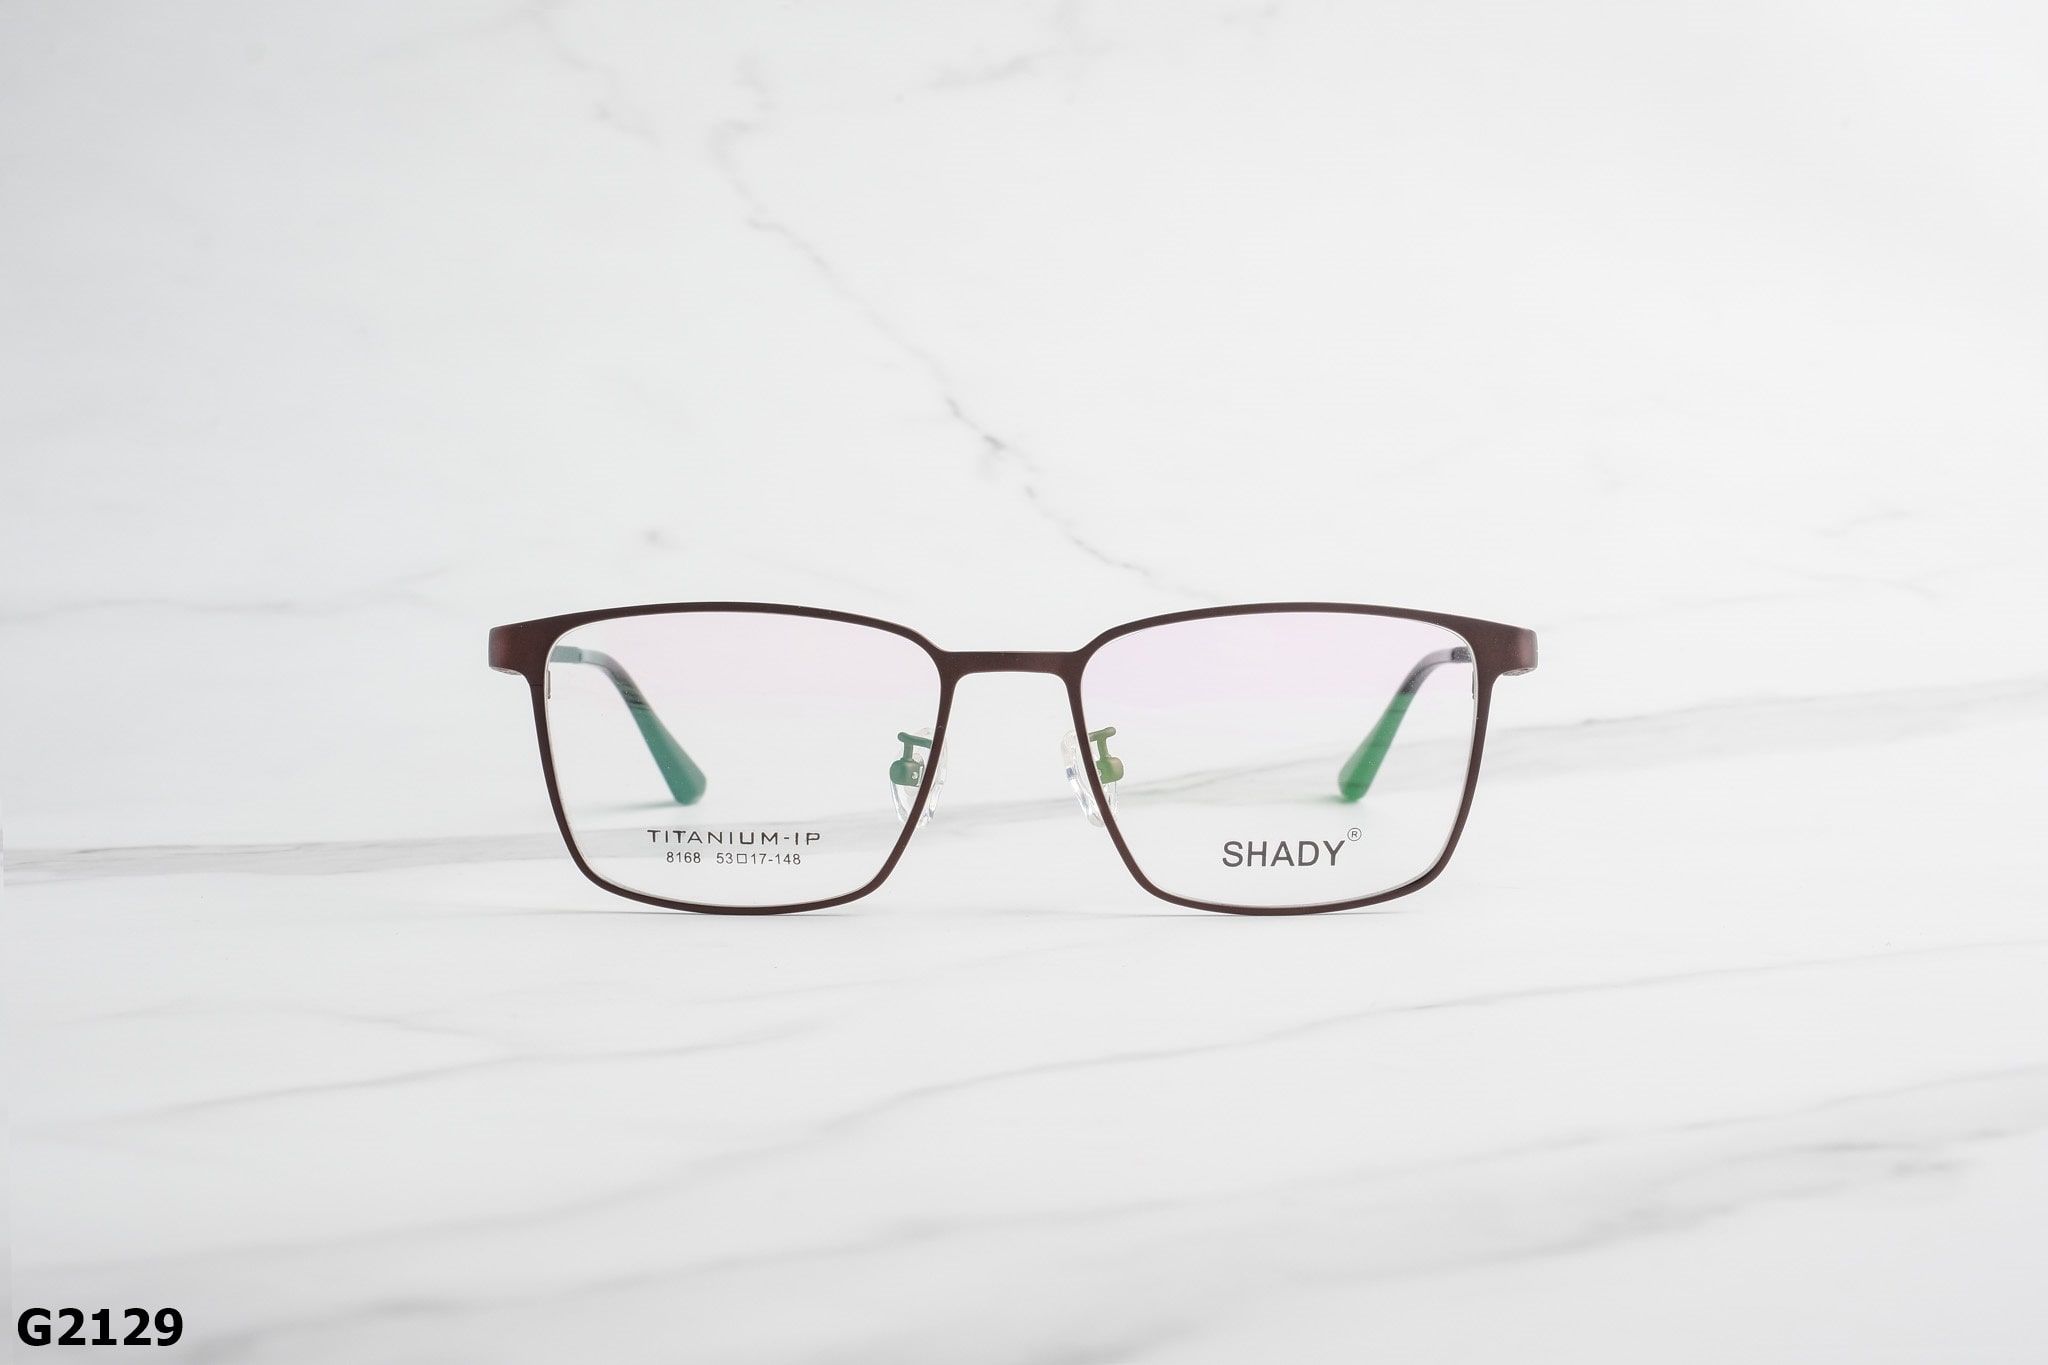  SHADY Eyewear - Glasses - G2129 